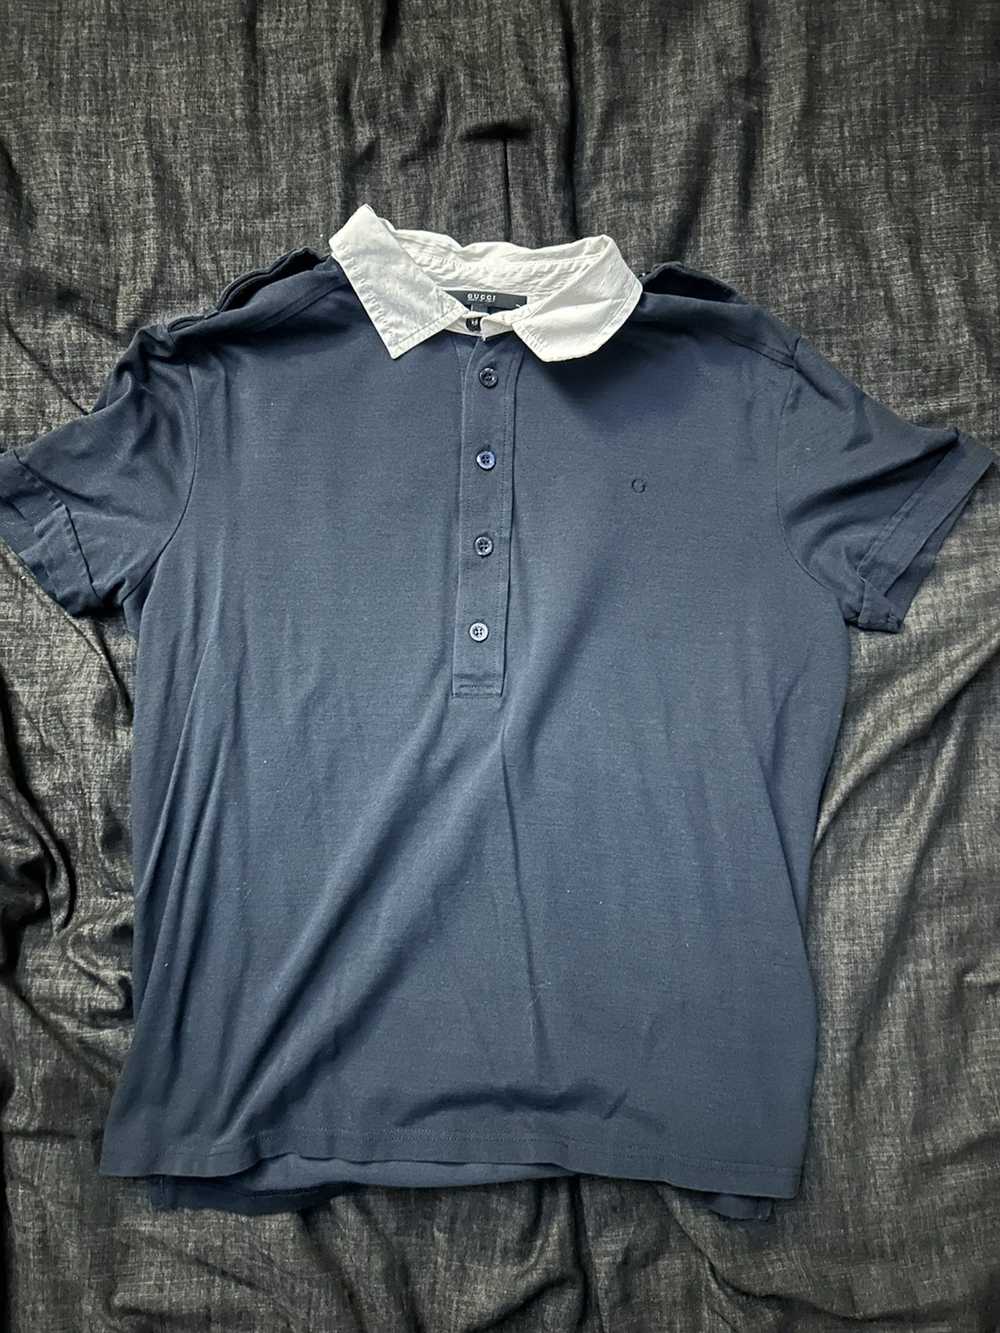 Gucci Navy Blue Gucci Collar Polo Shirt - image 1